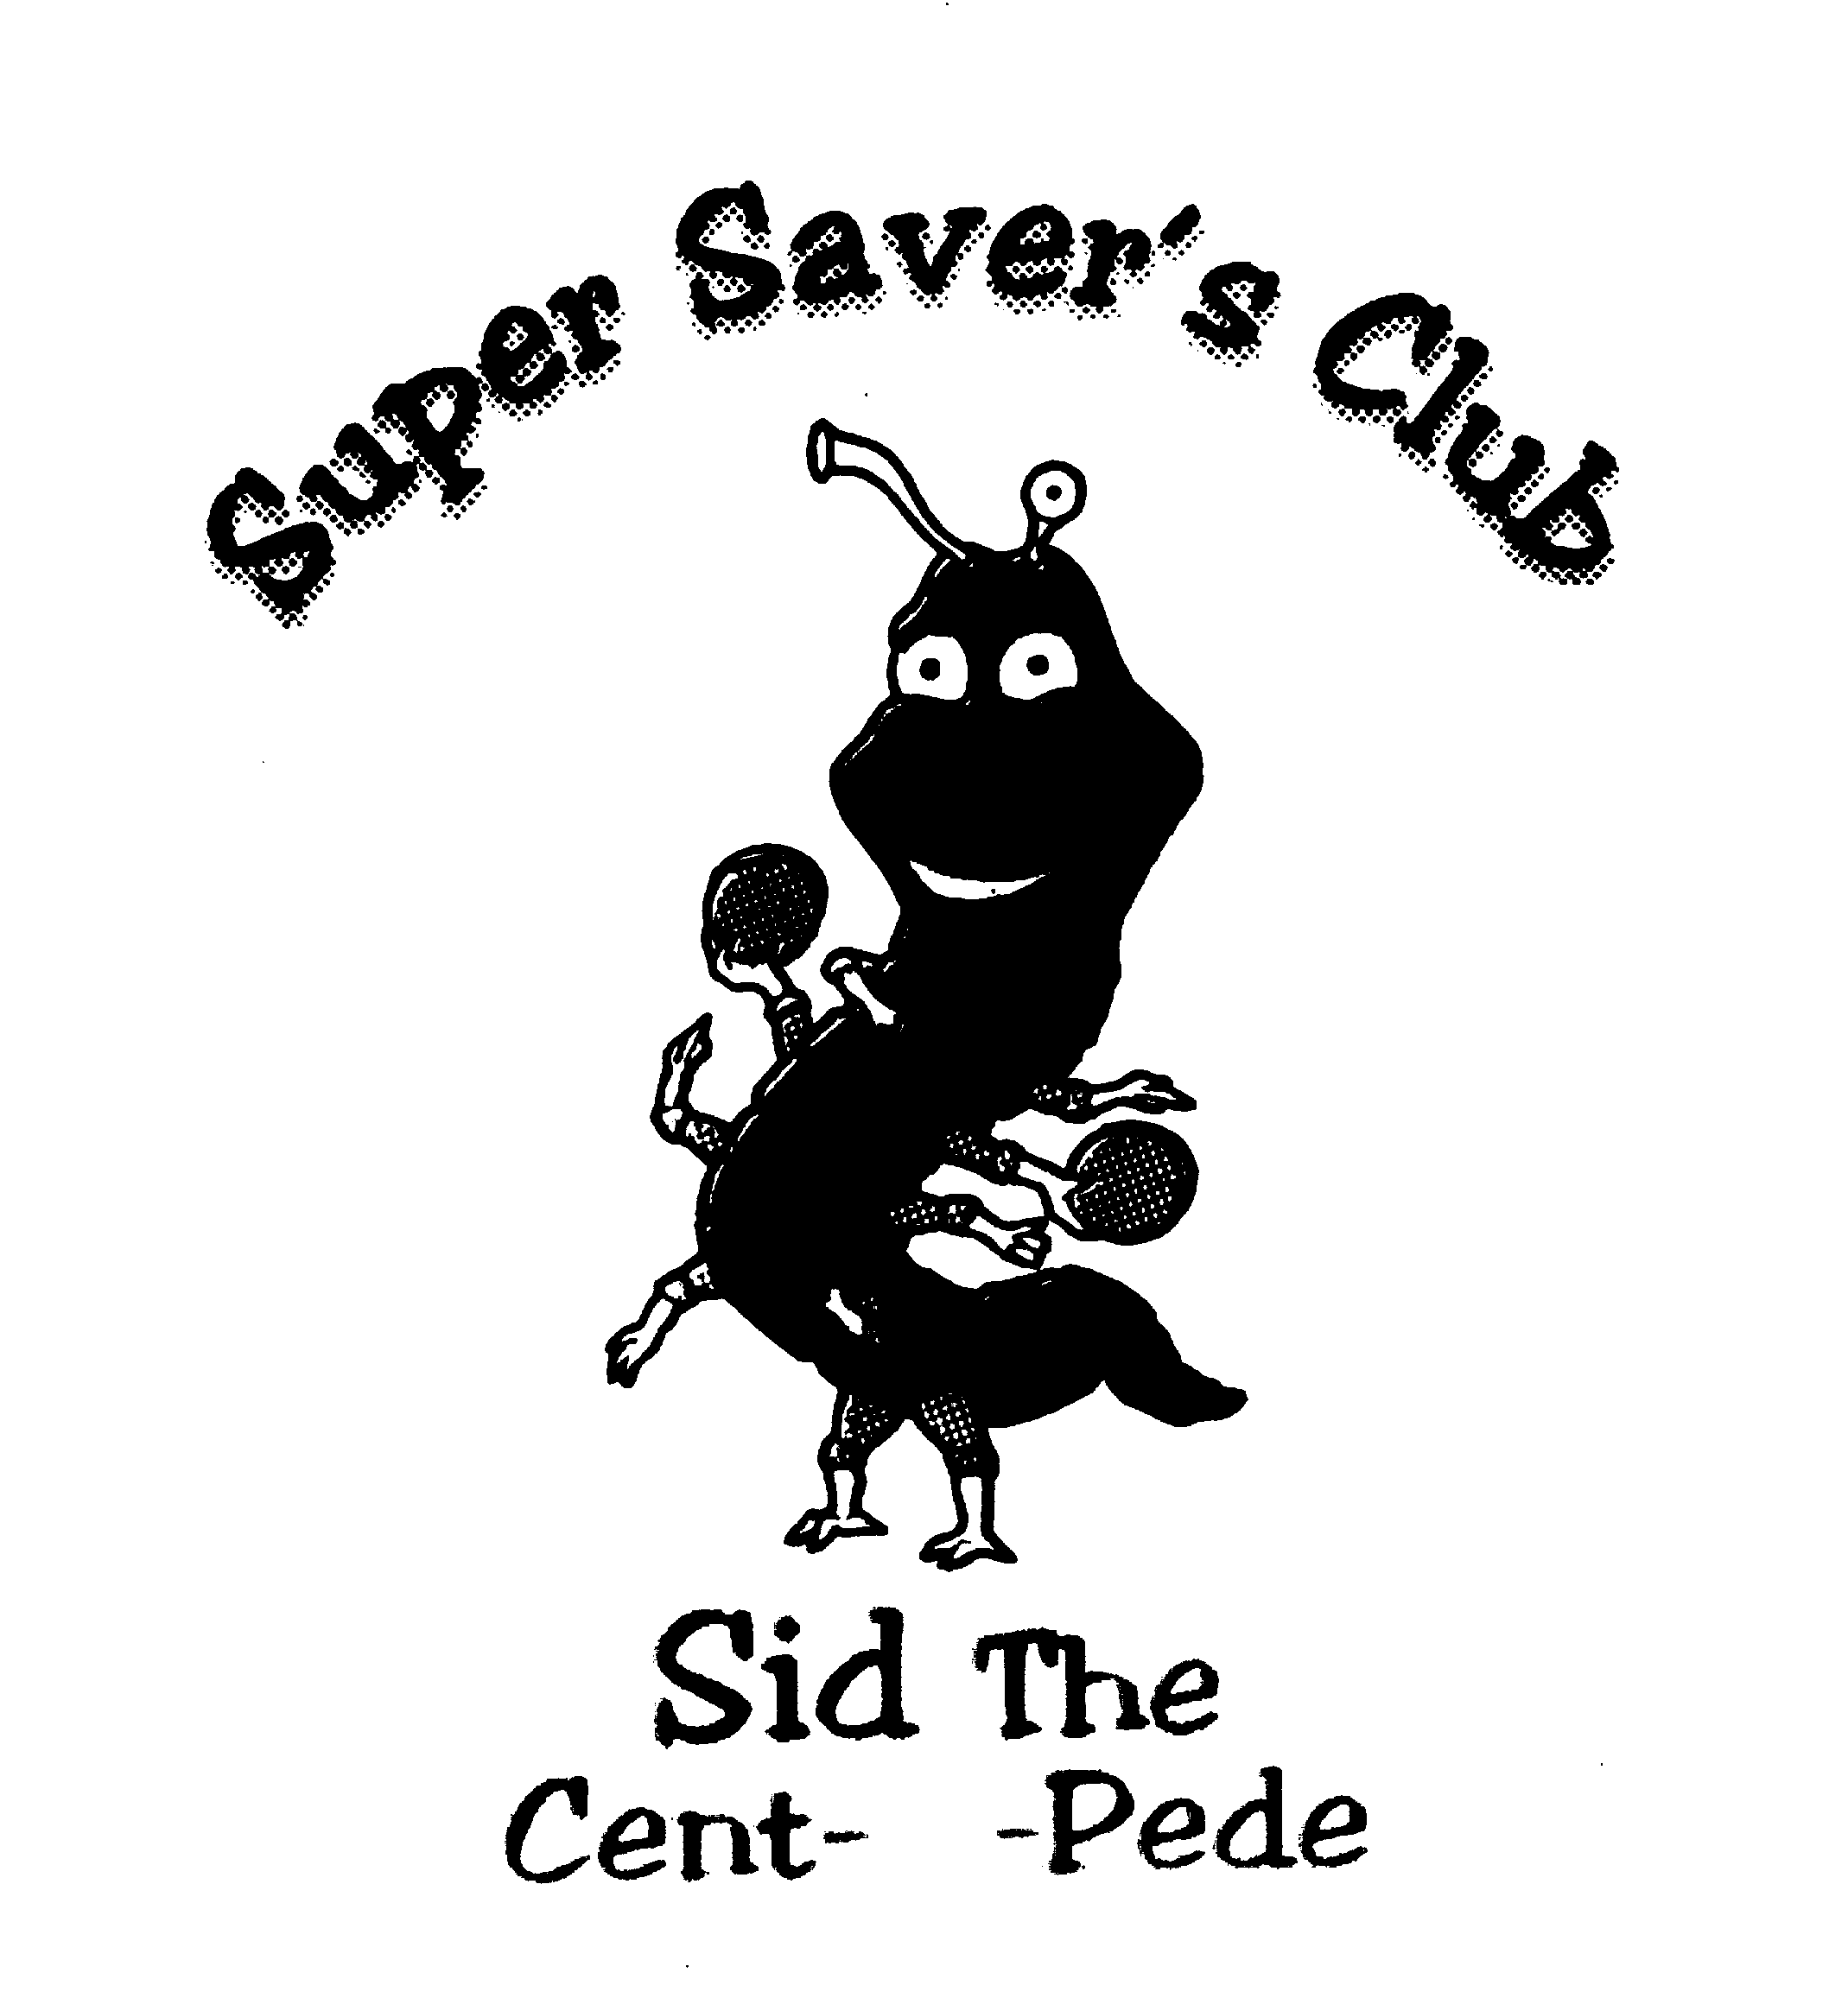  SUPER SAVER'S CLUB SID THE CENT-A-PEDE